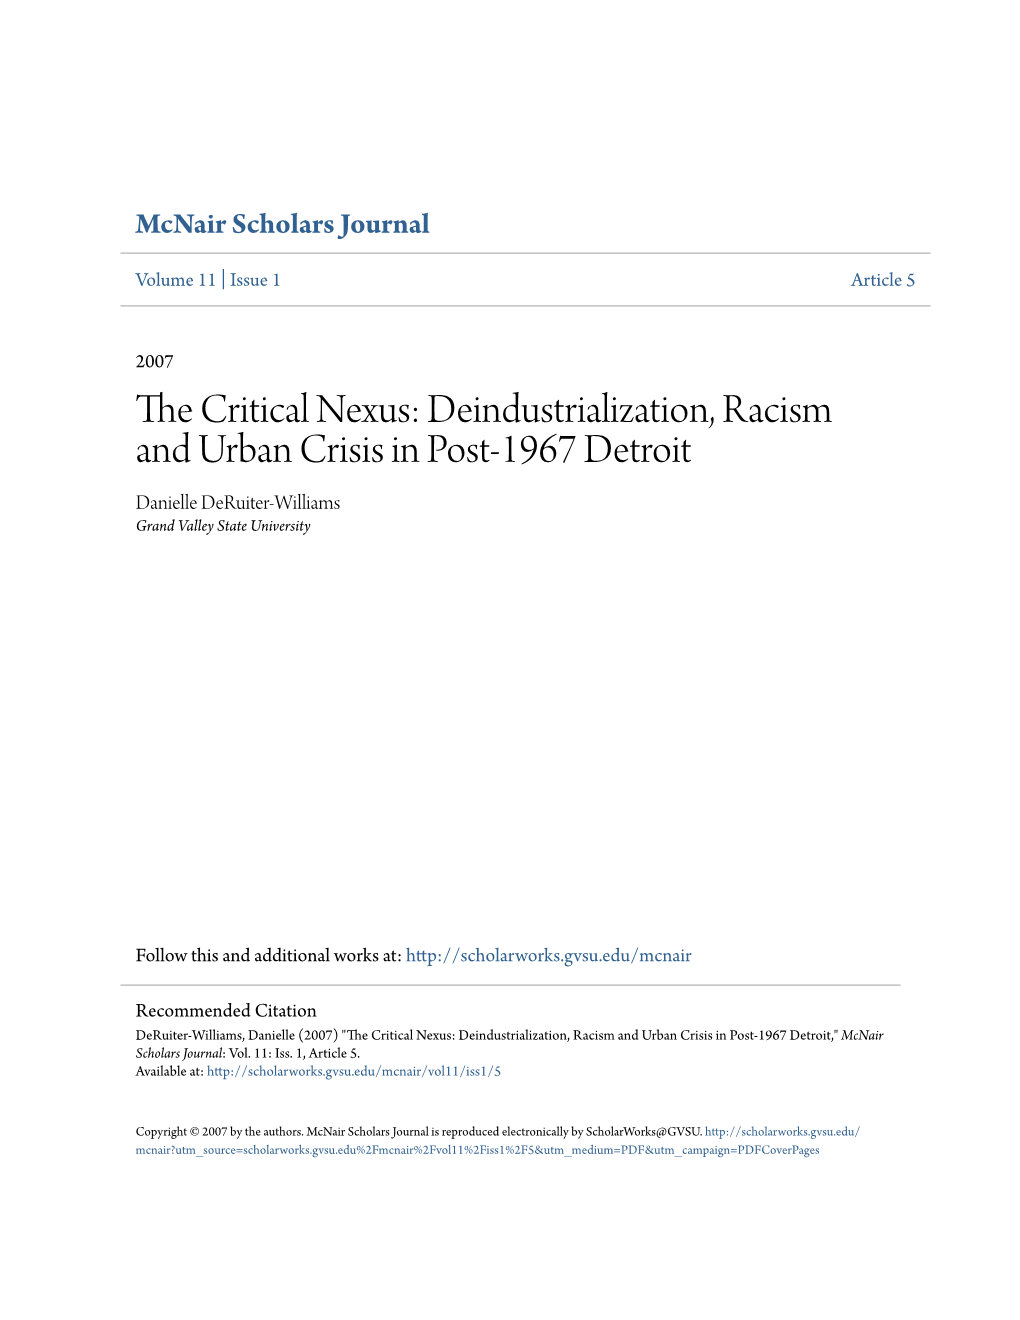 The Critical Nexus: Deindustrialization, Racism and Urban Crisis in Post-1967 Detroit